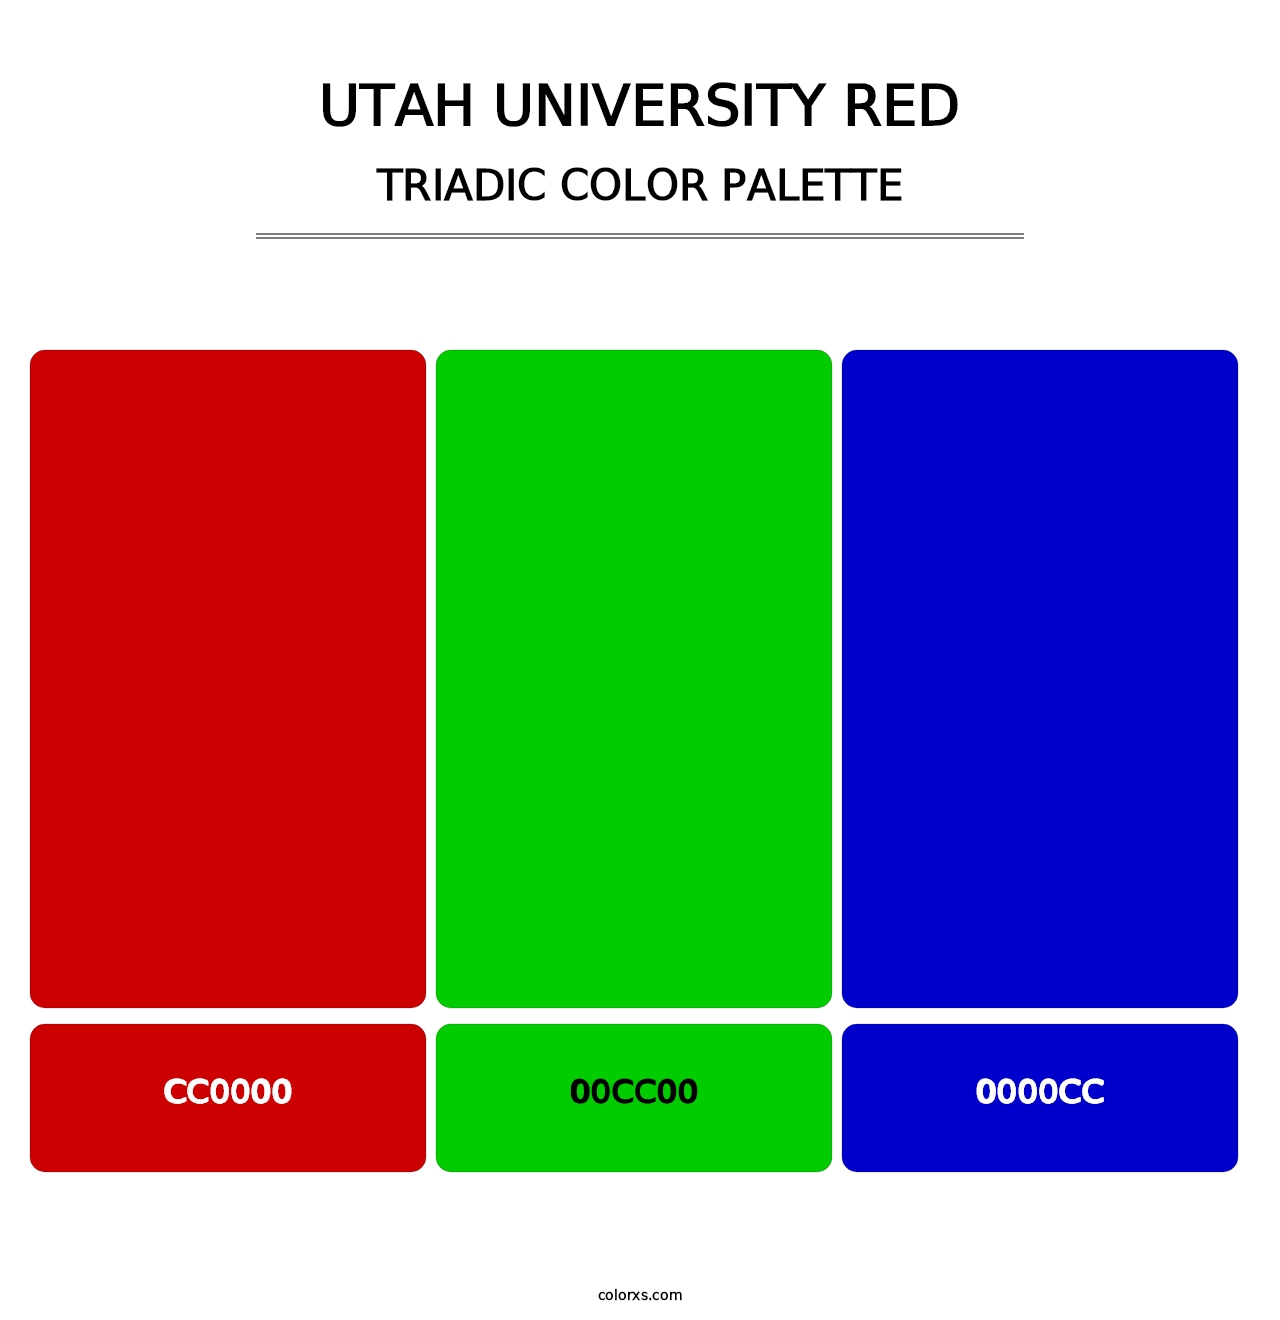 Utah University Red - Triadic Color Palette